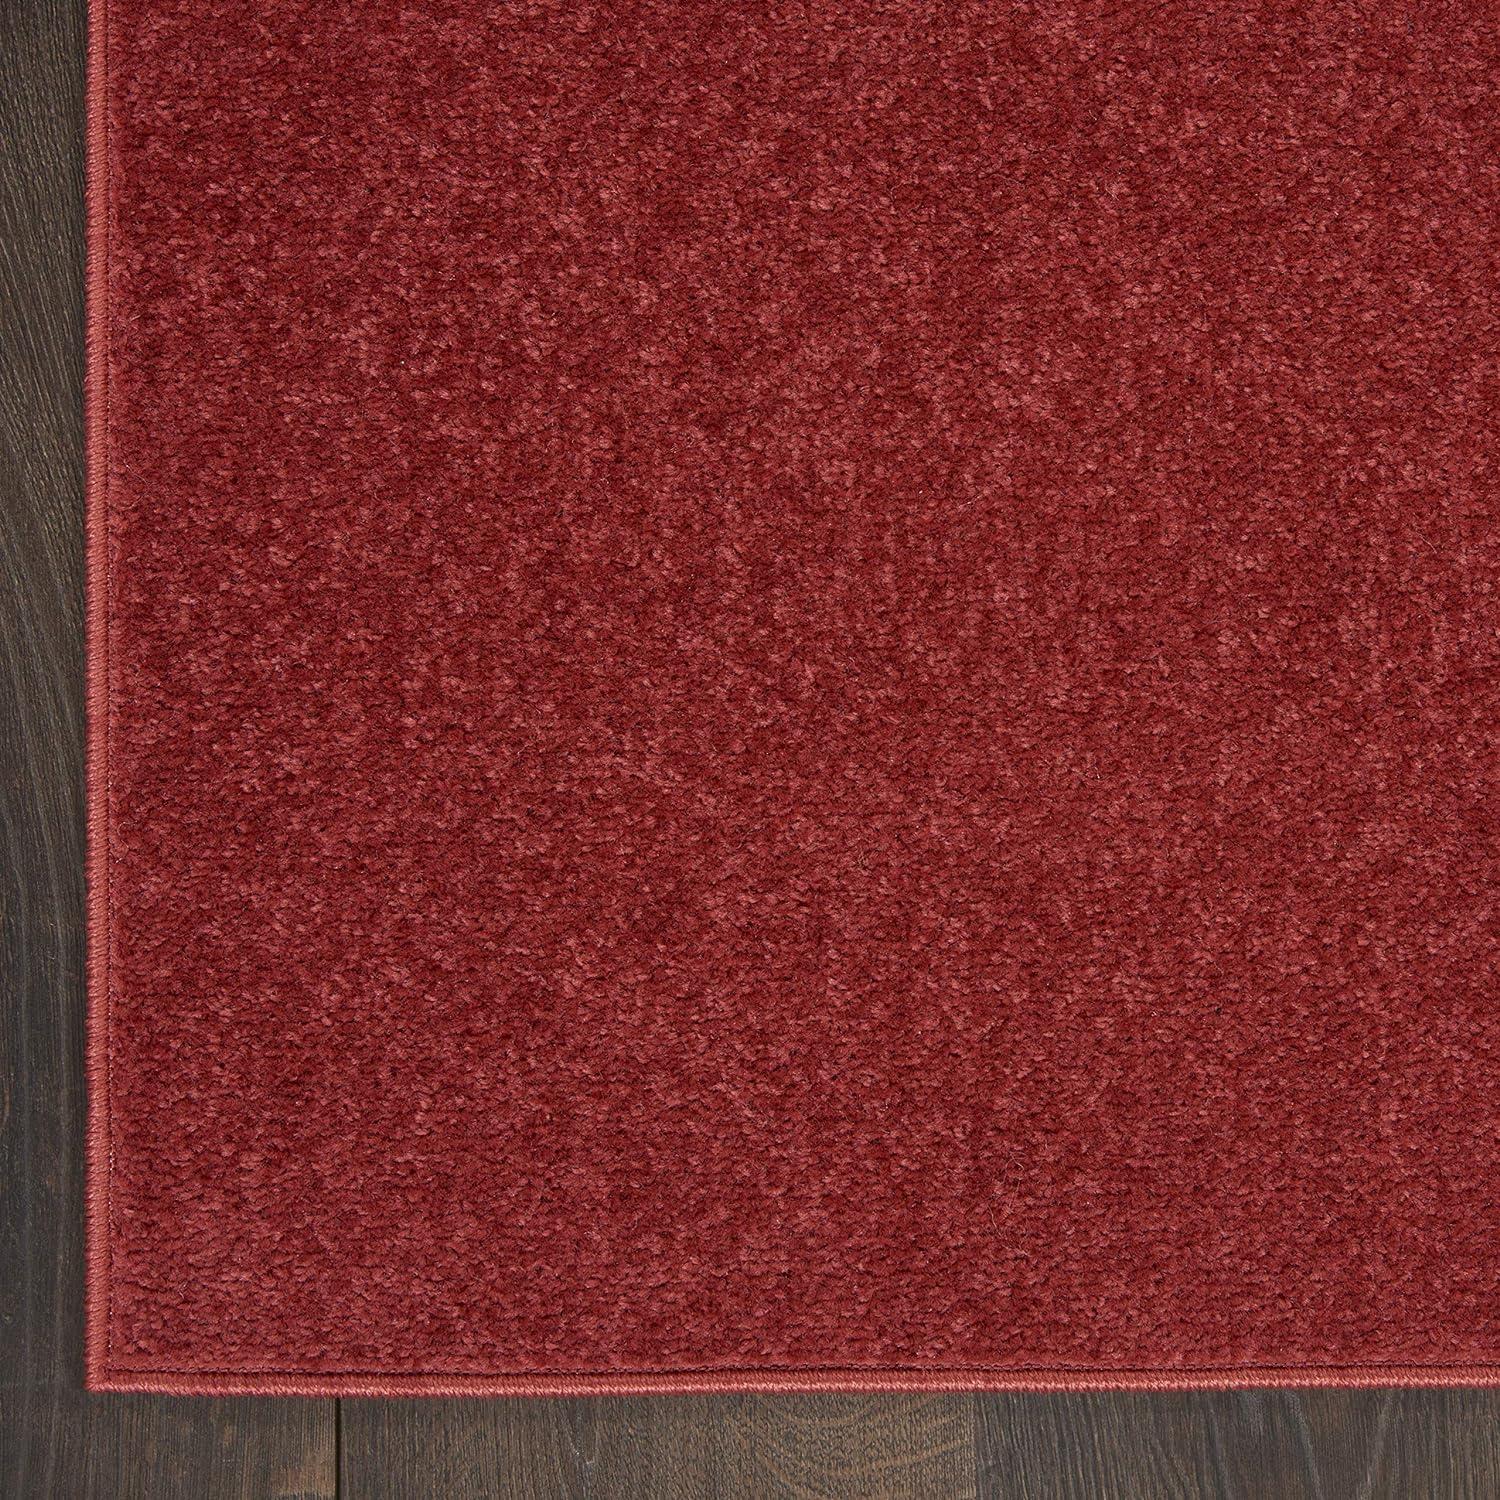 Brick Red Essentials 5' Square Indoor/Outdoor Easy-Care Rug